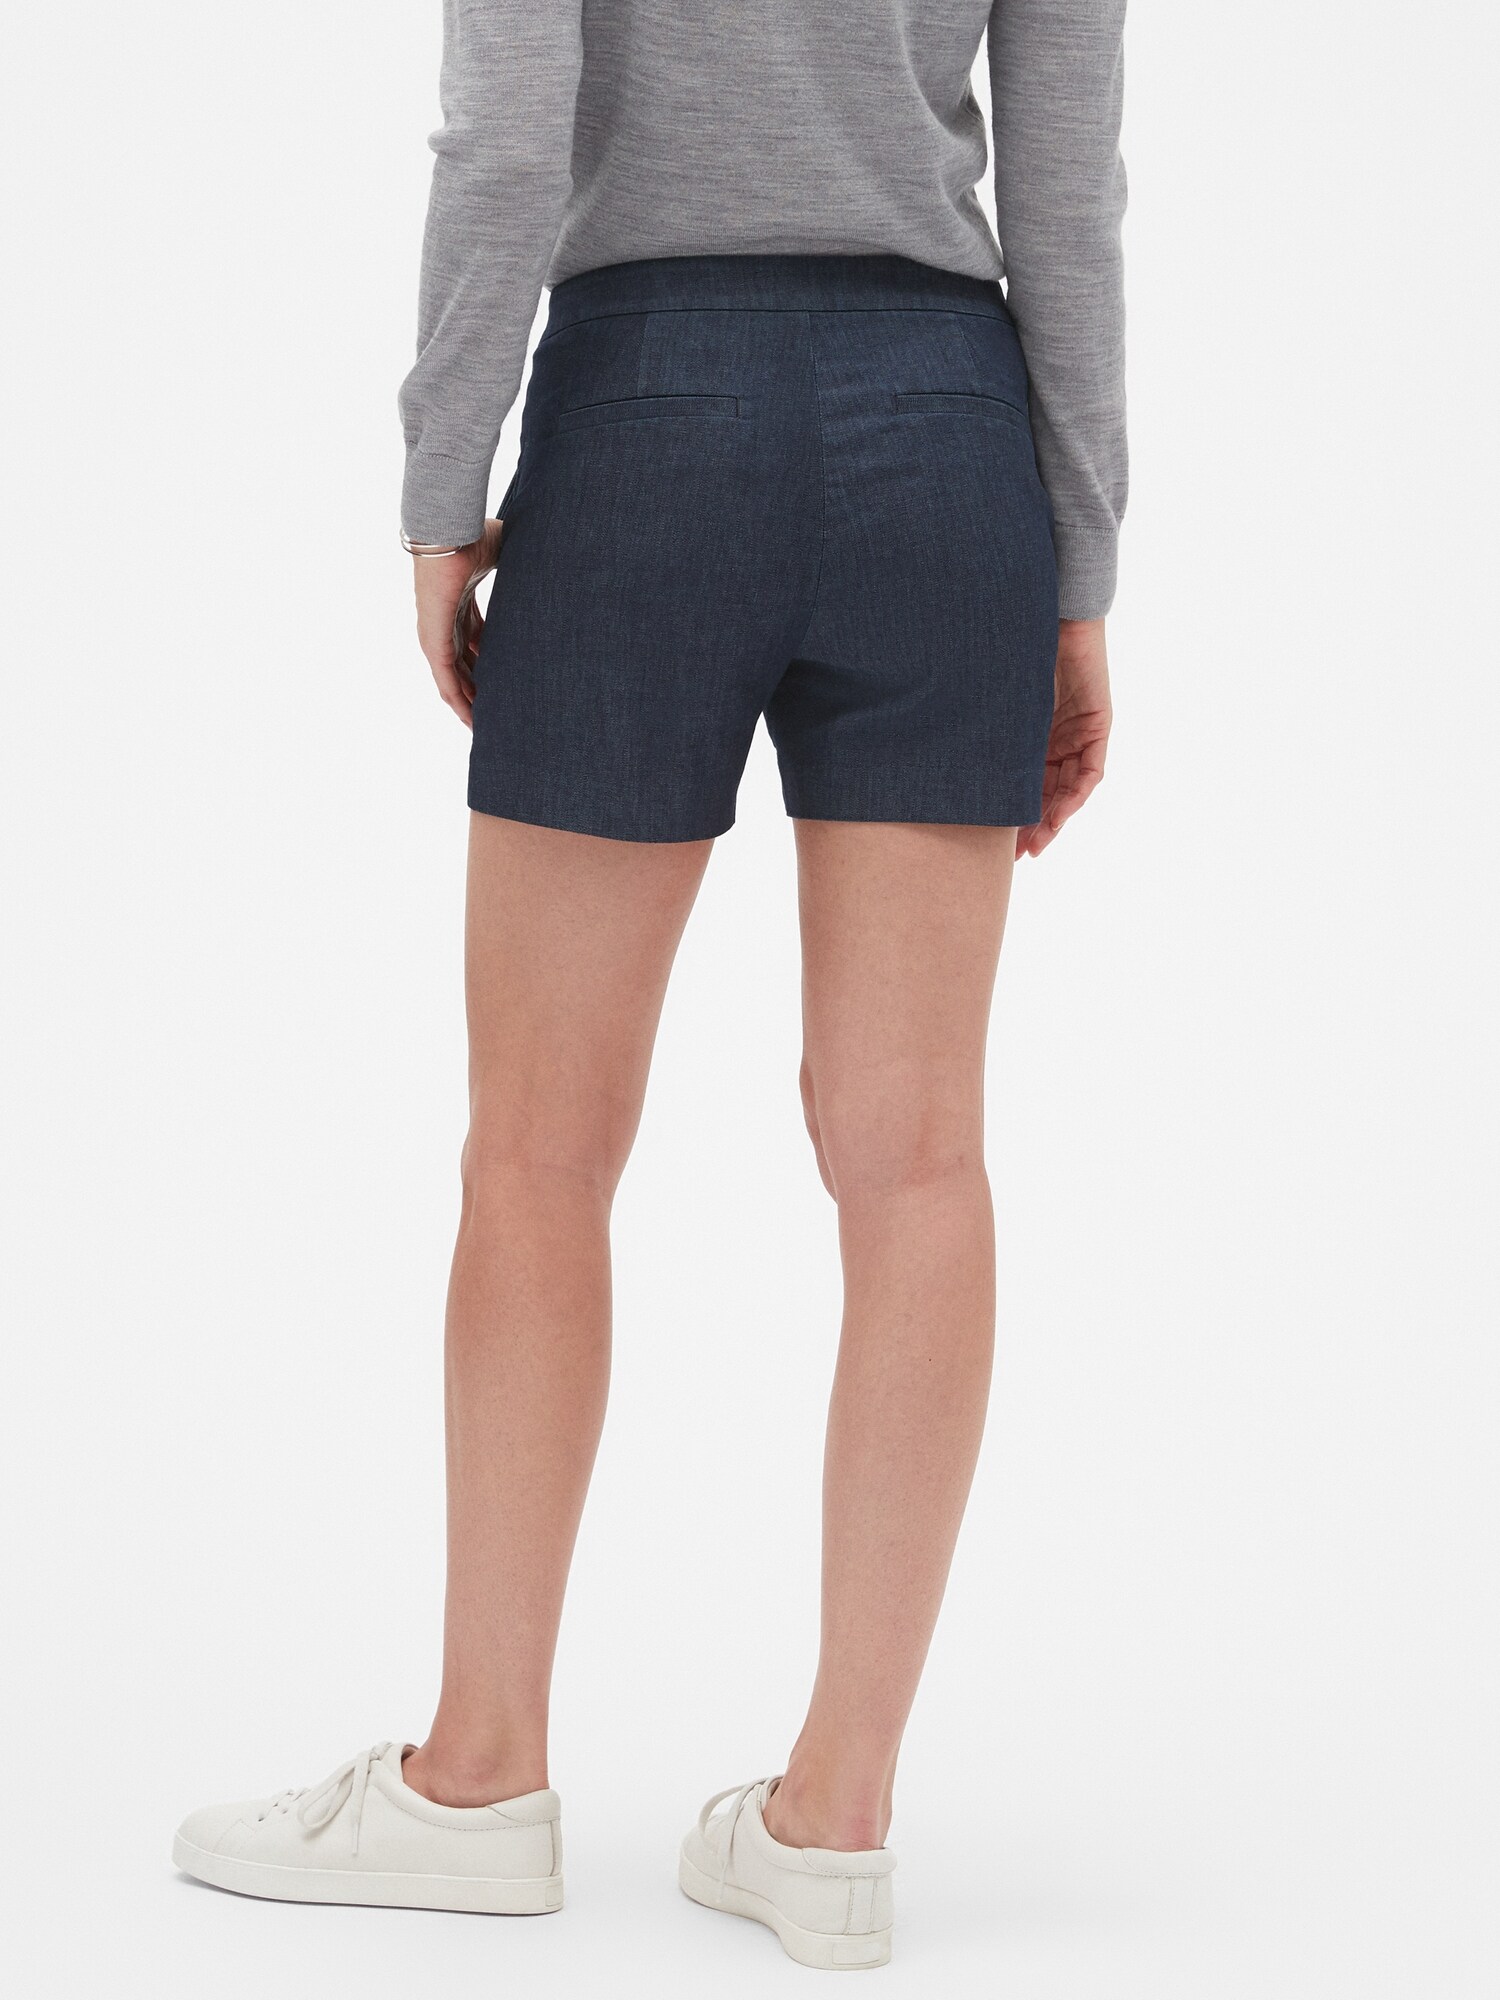 Chambray Sailor Shorts - 4 inch inseam